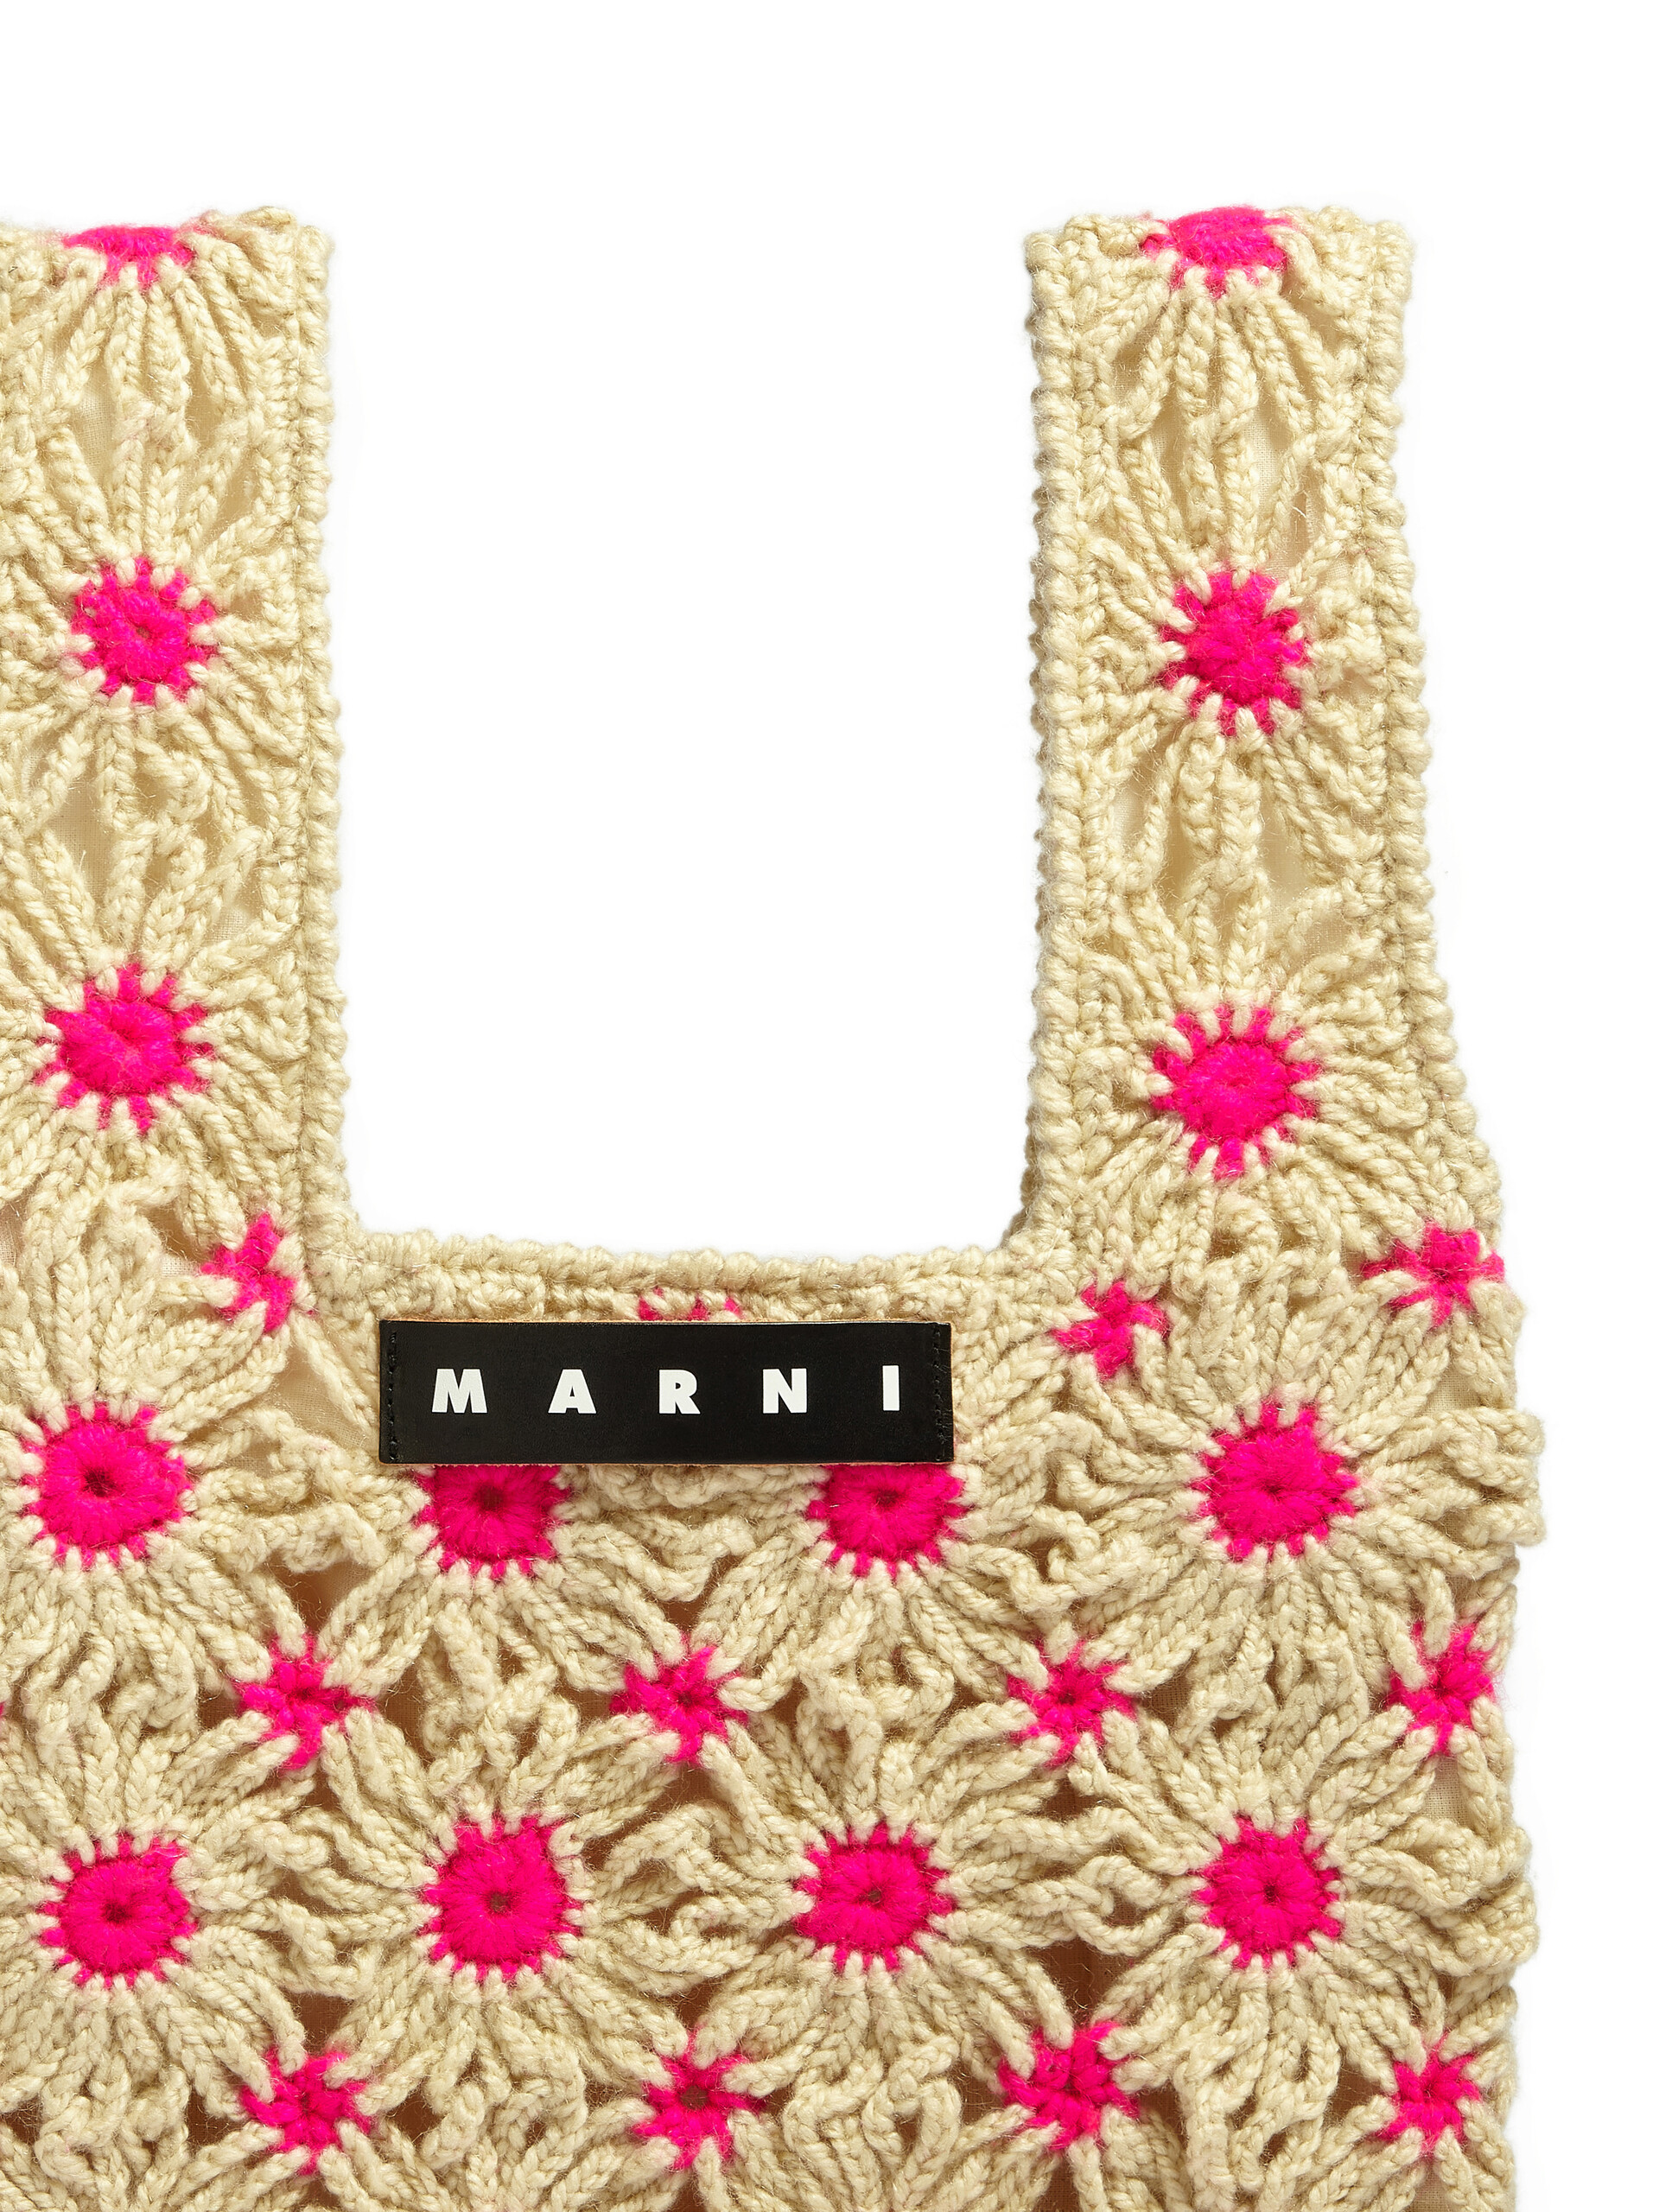 MARNI MARKET FISH bag in pink crochet - Shopping Bags - Image 4